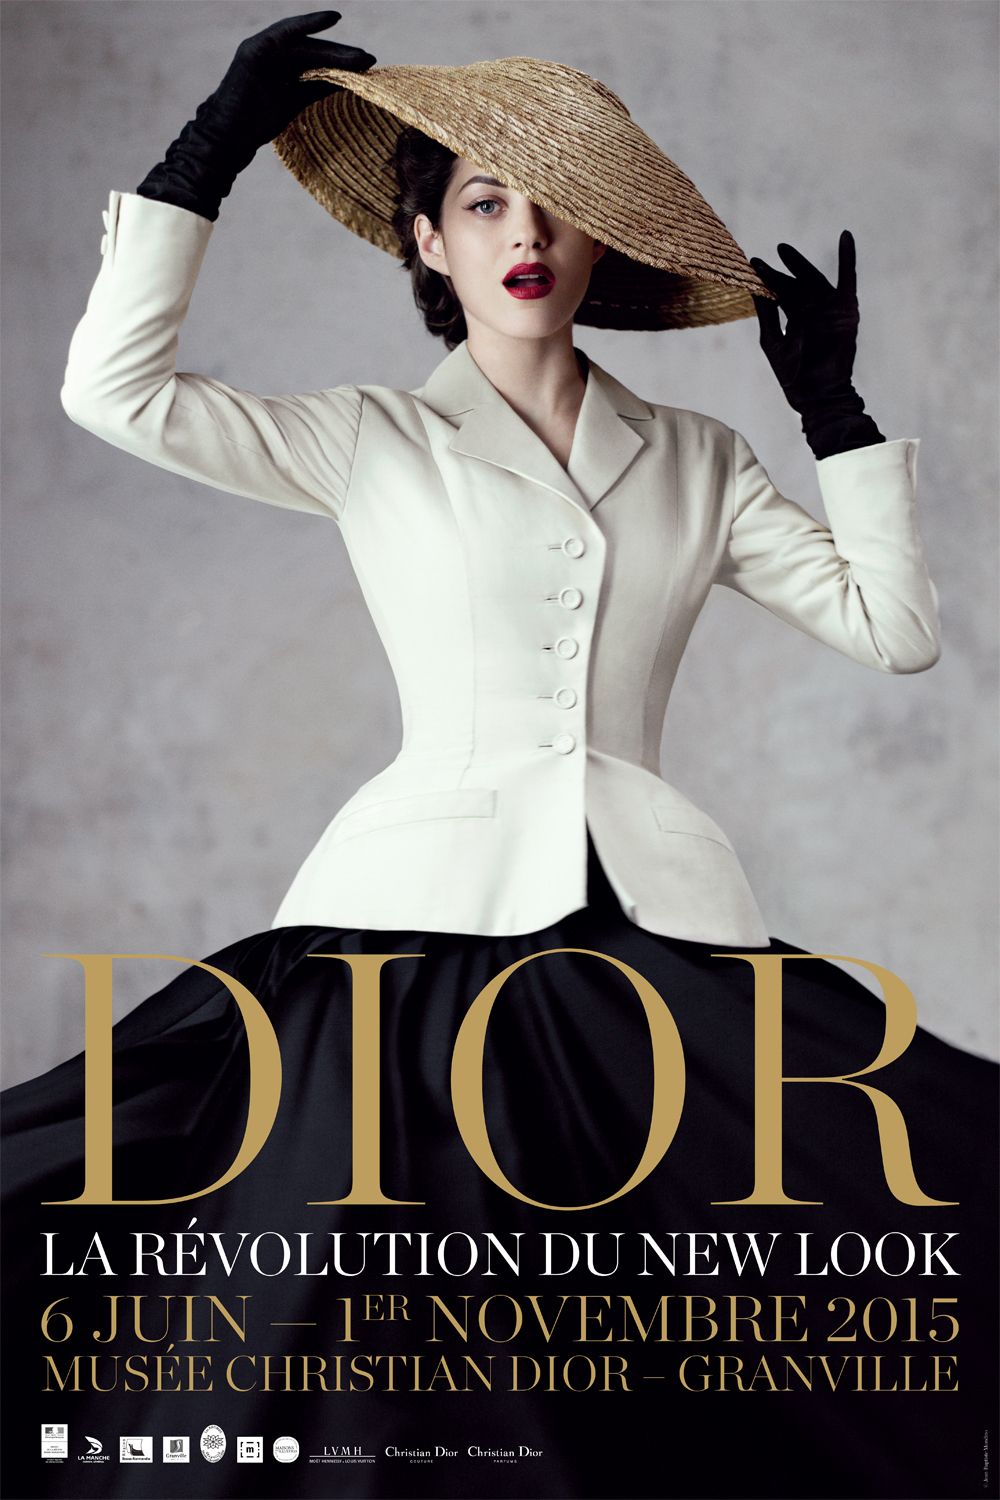 Diors New Look Revolution